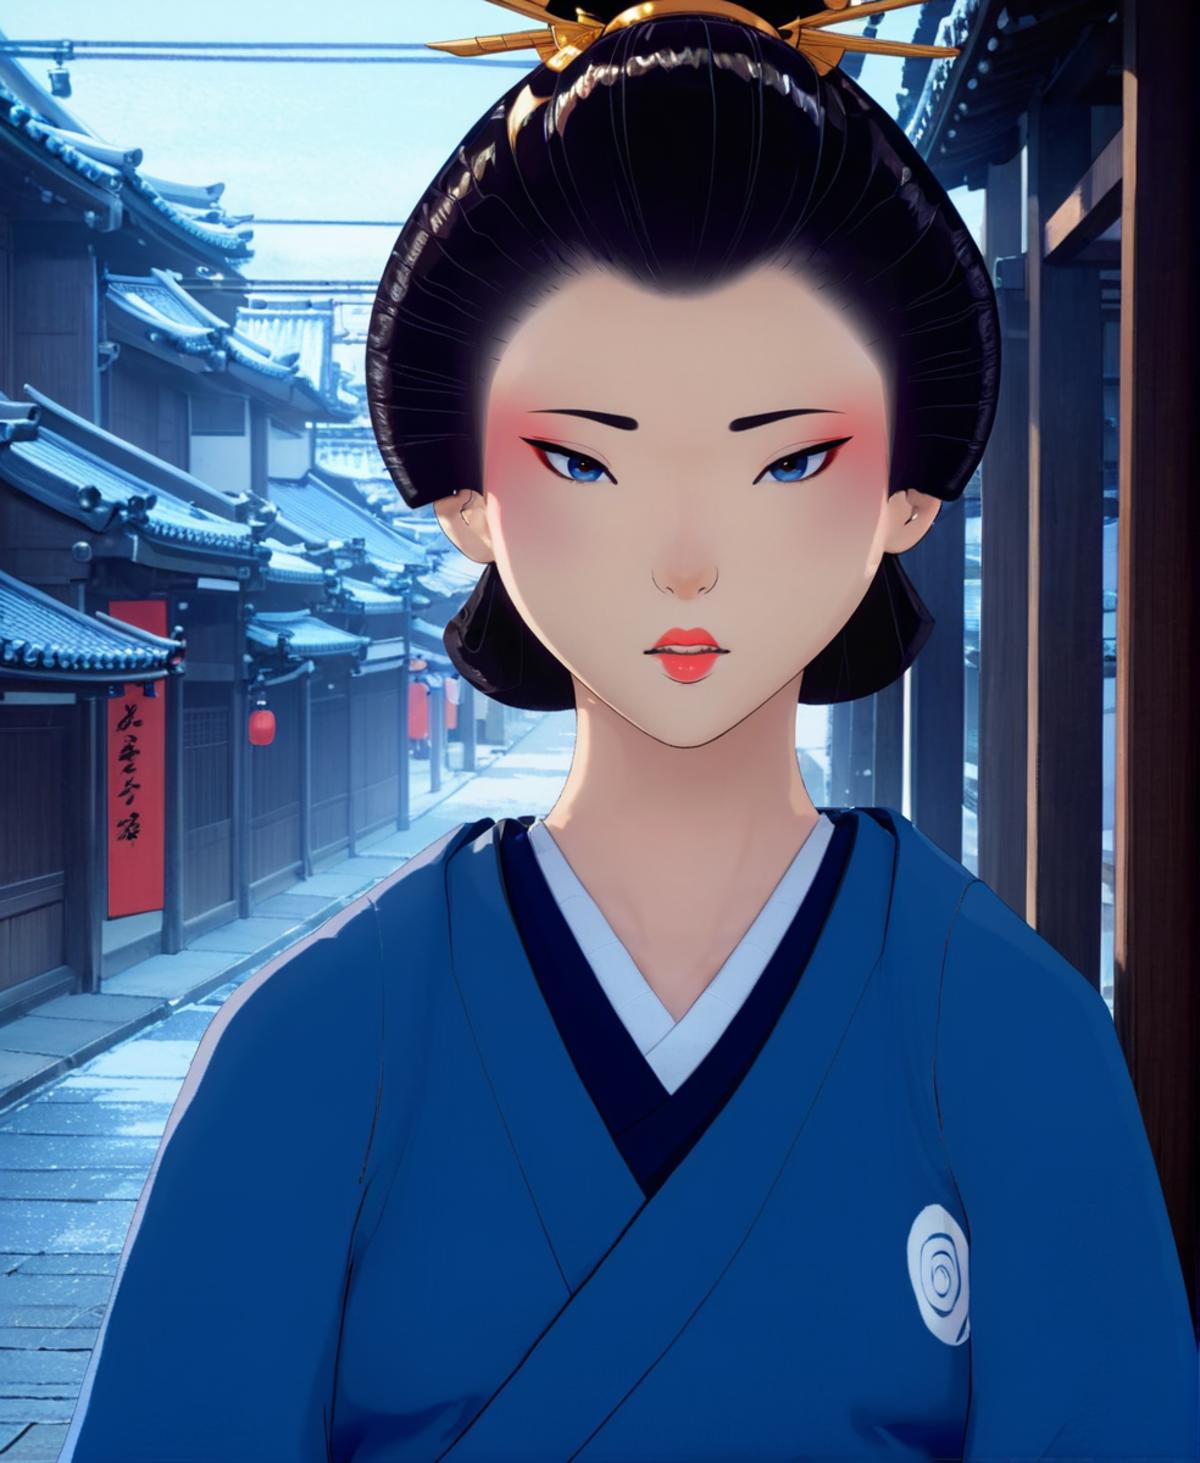 Blue Eye Samurai Style image by metulski